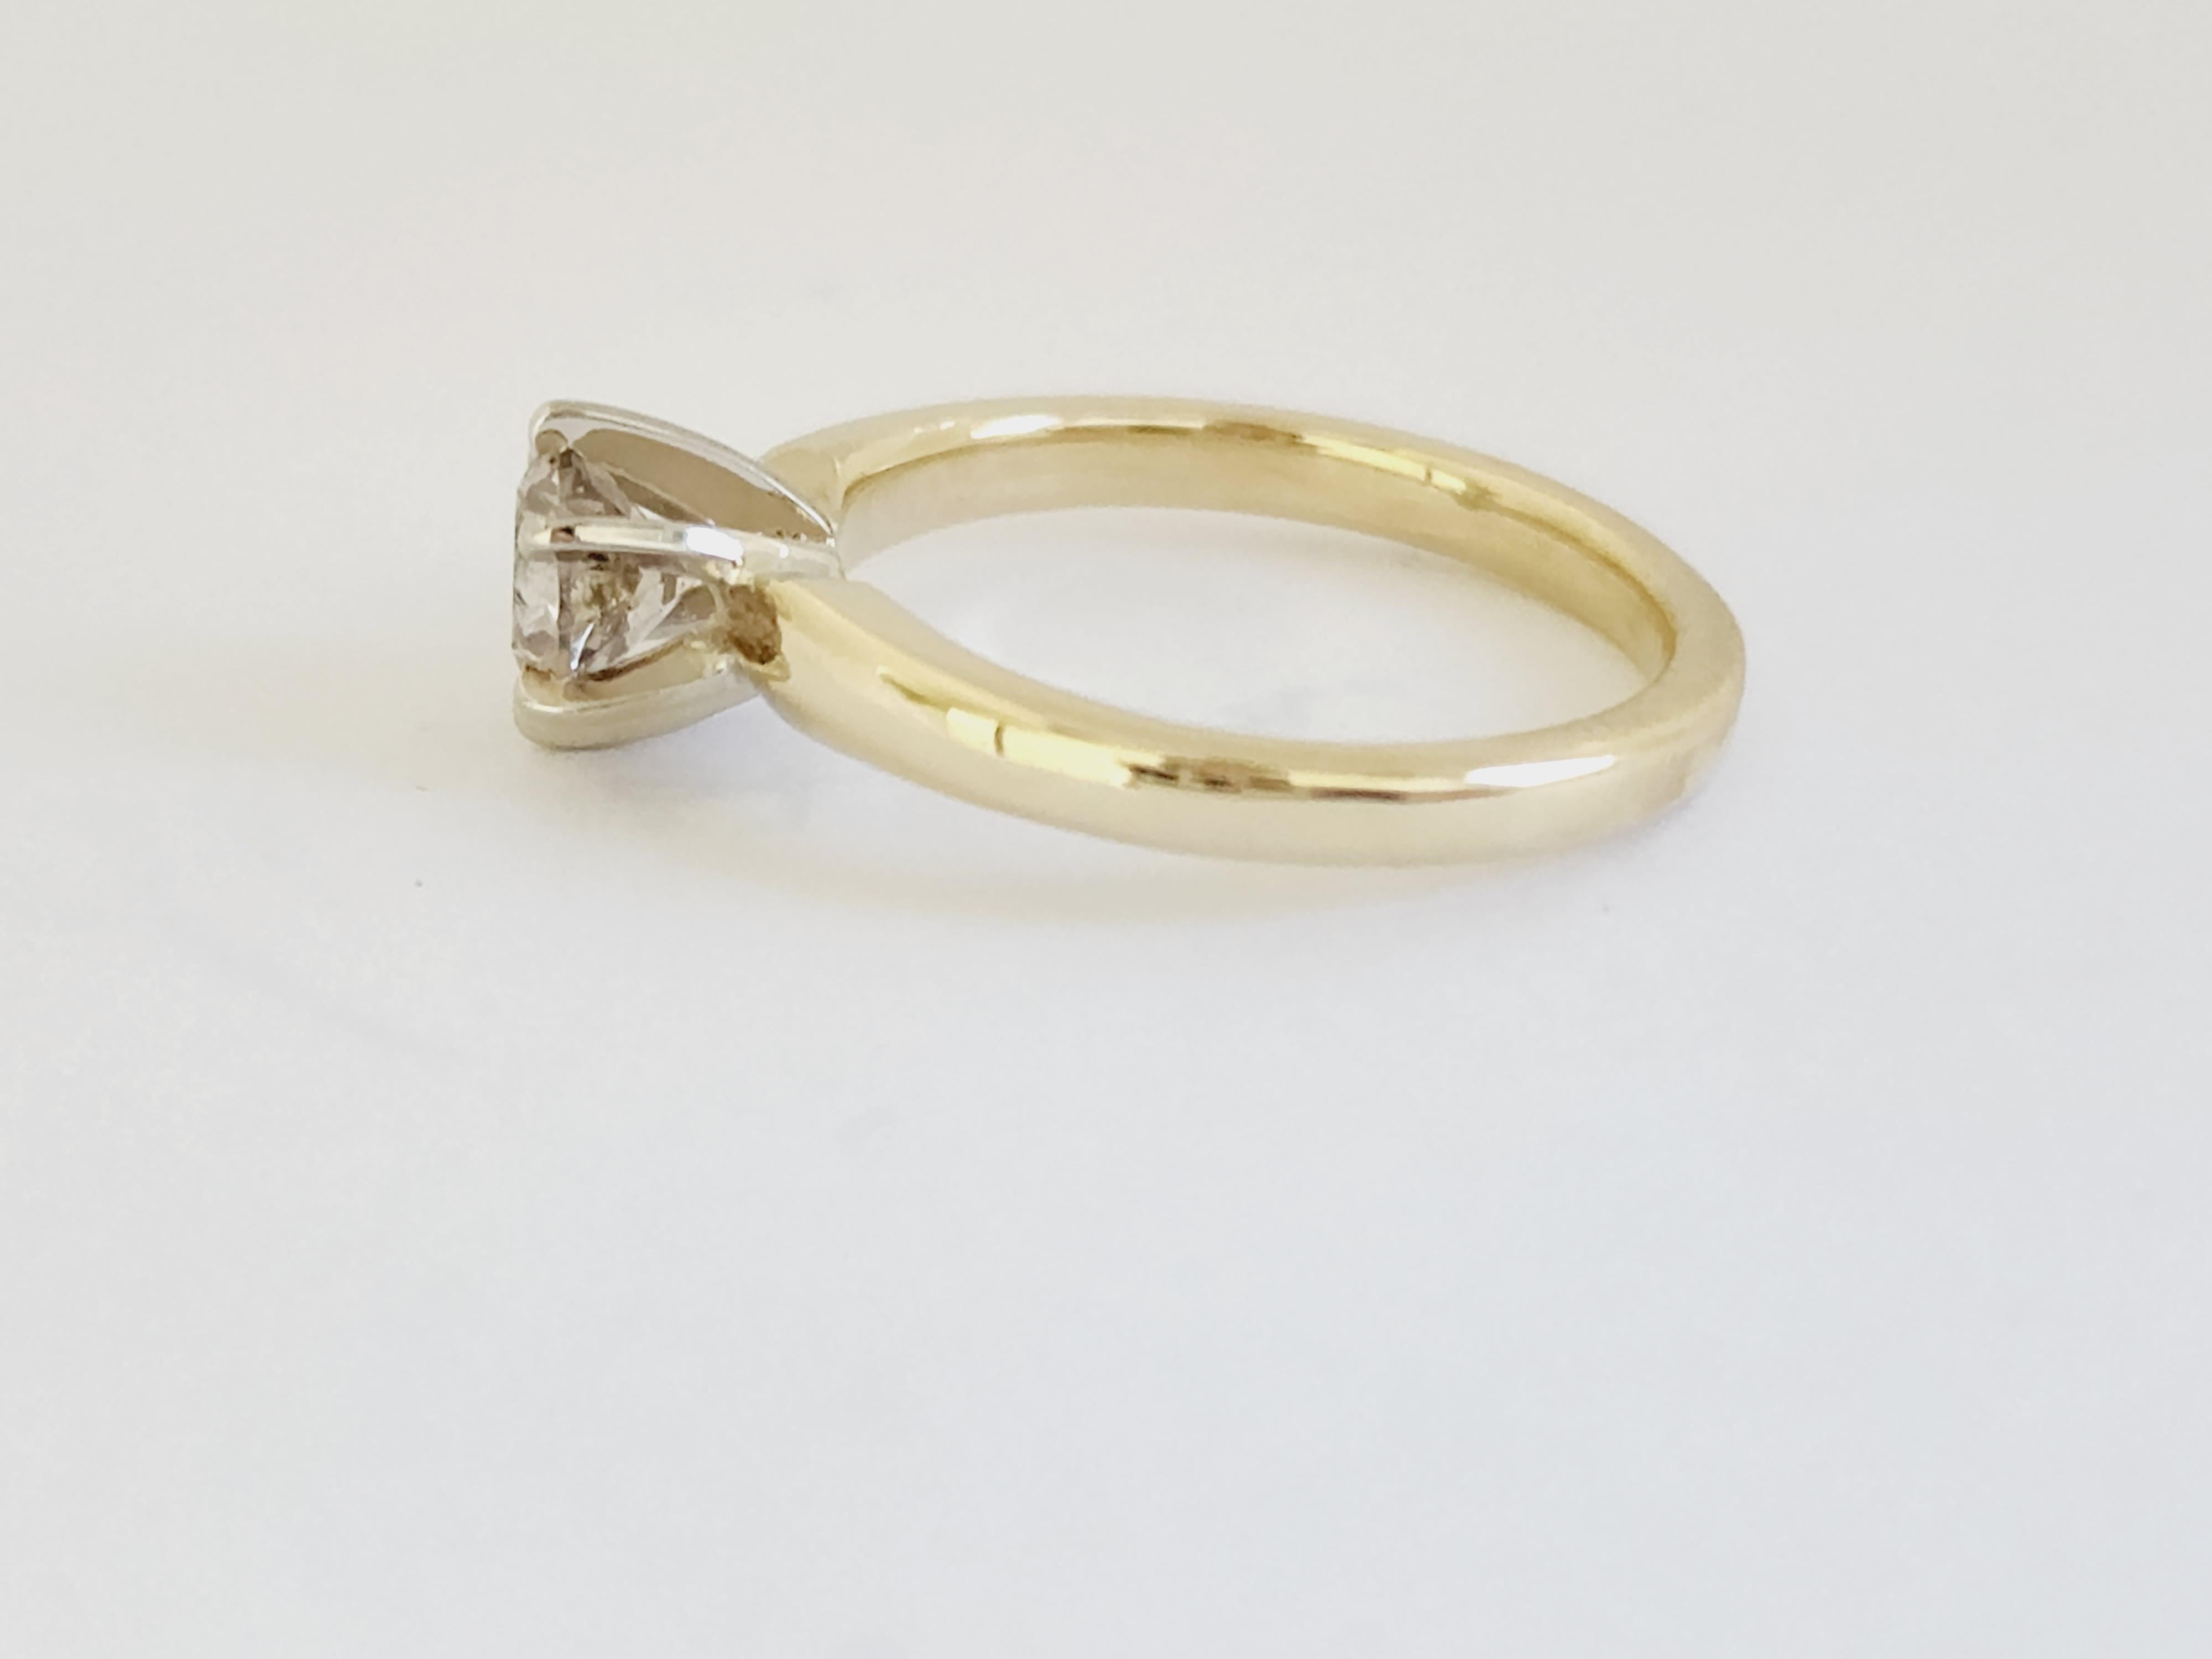 0.76 carat diamond ring